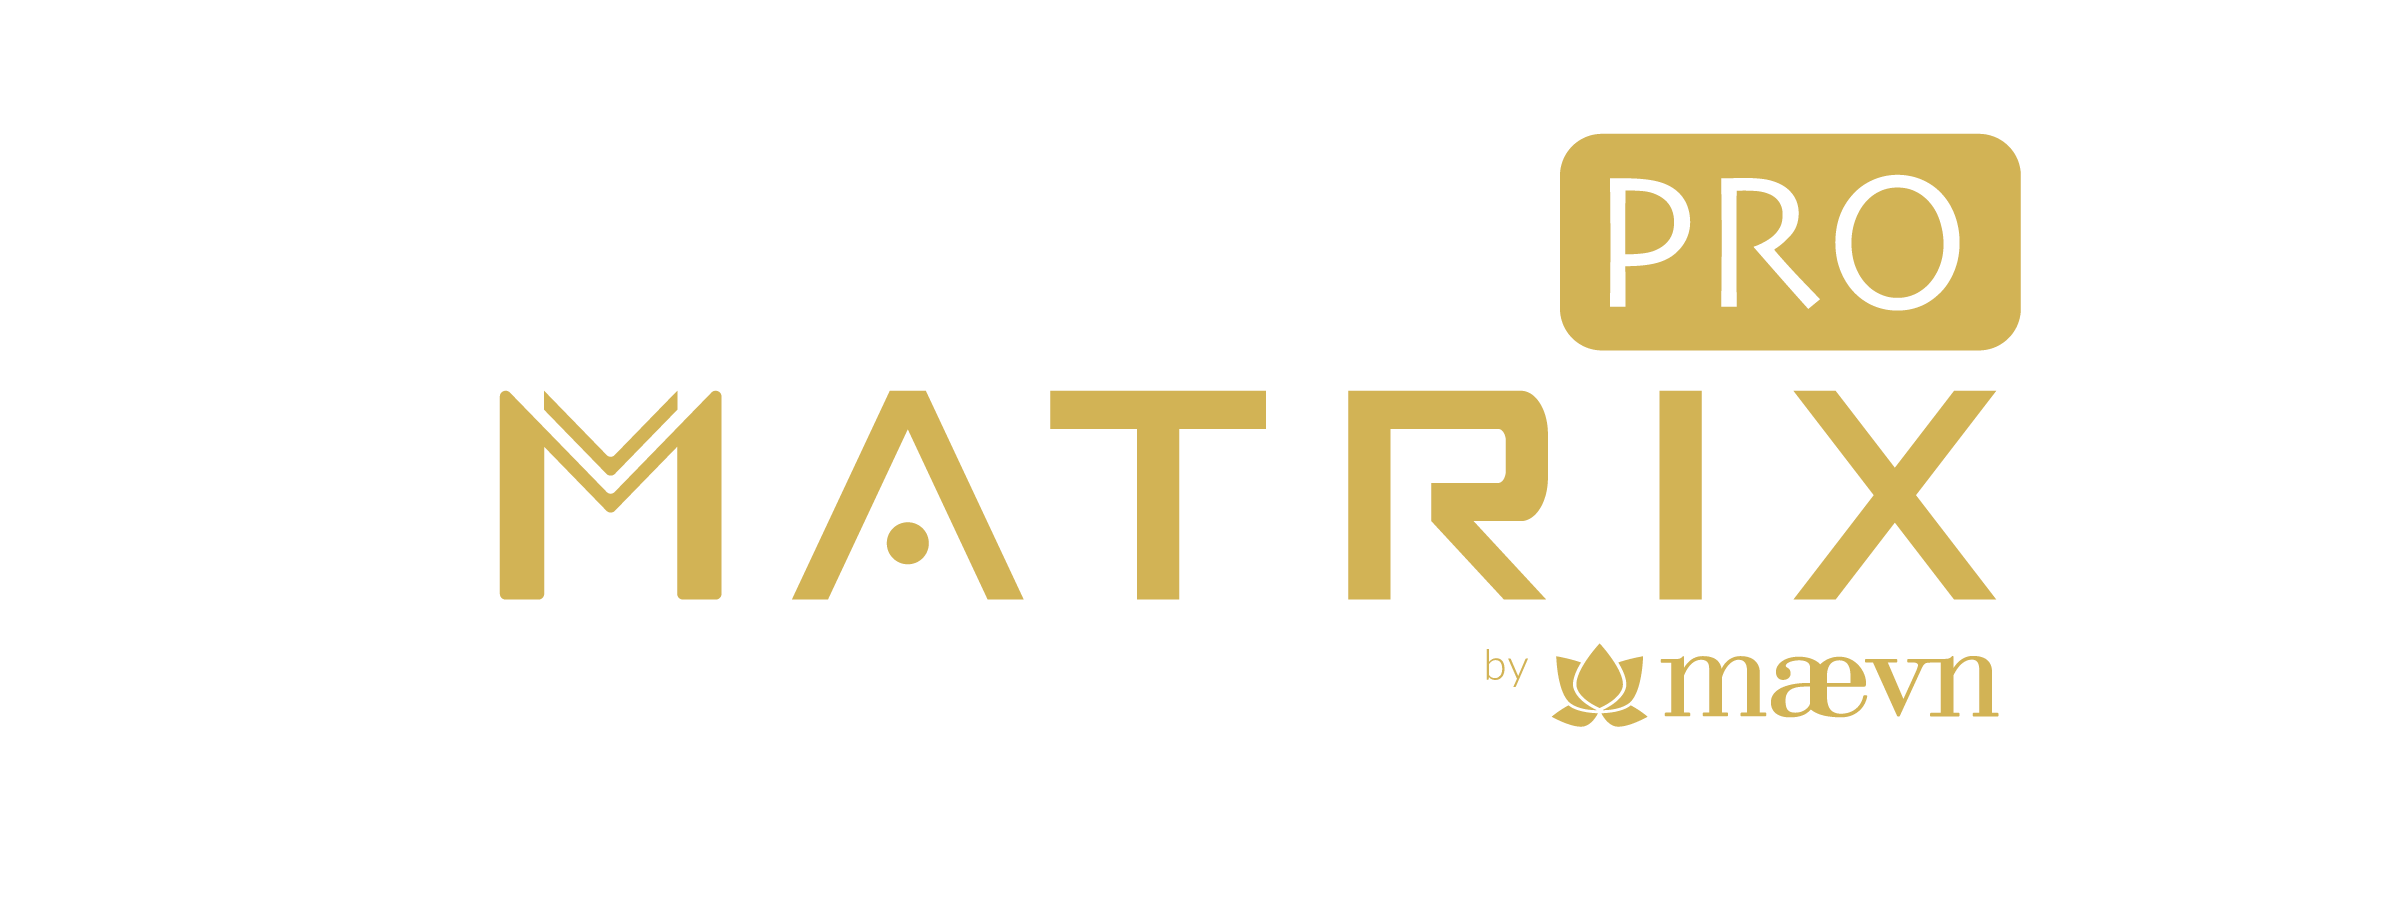 logo matrix pro